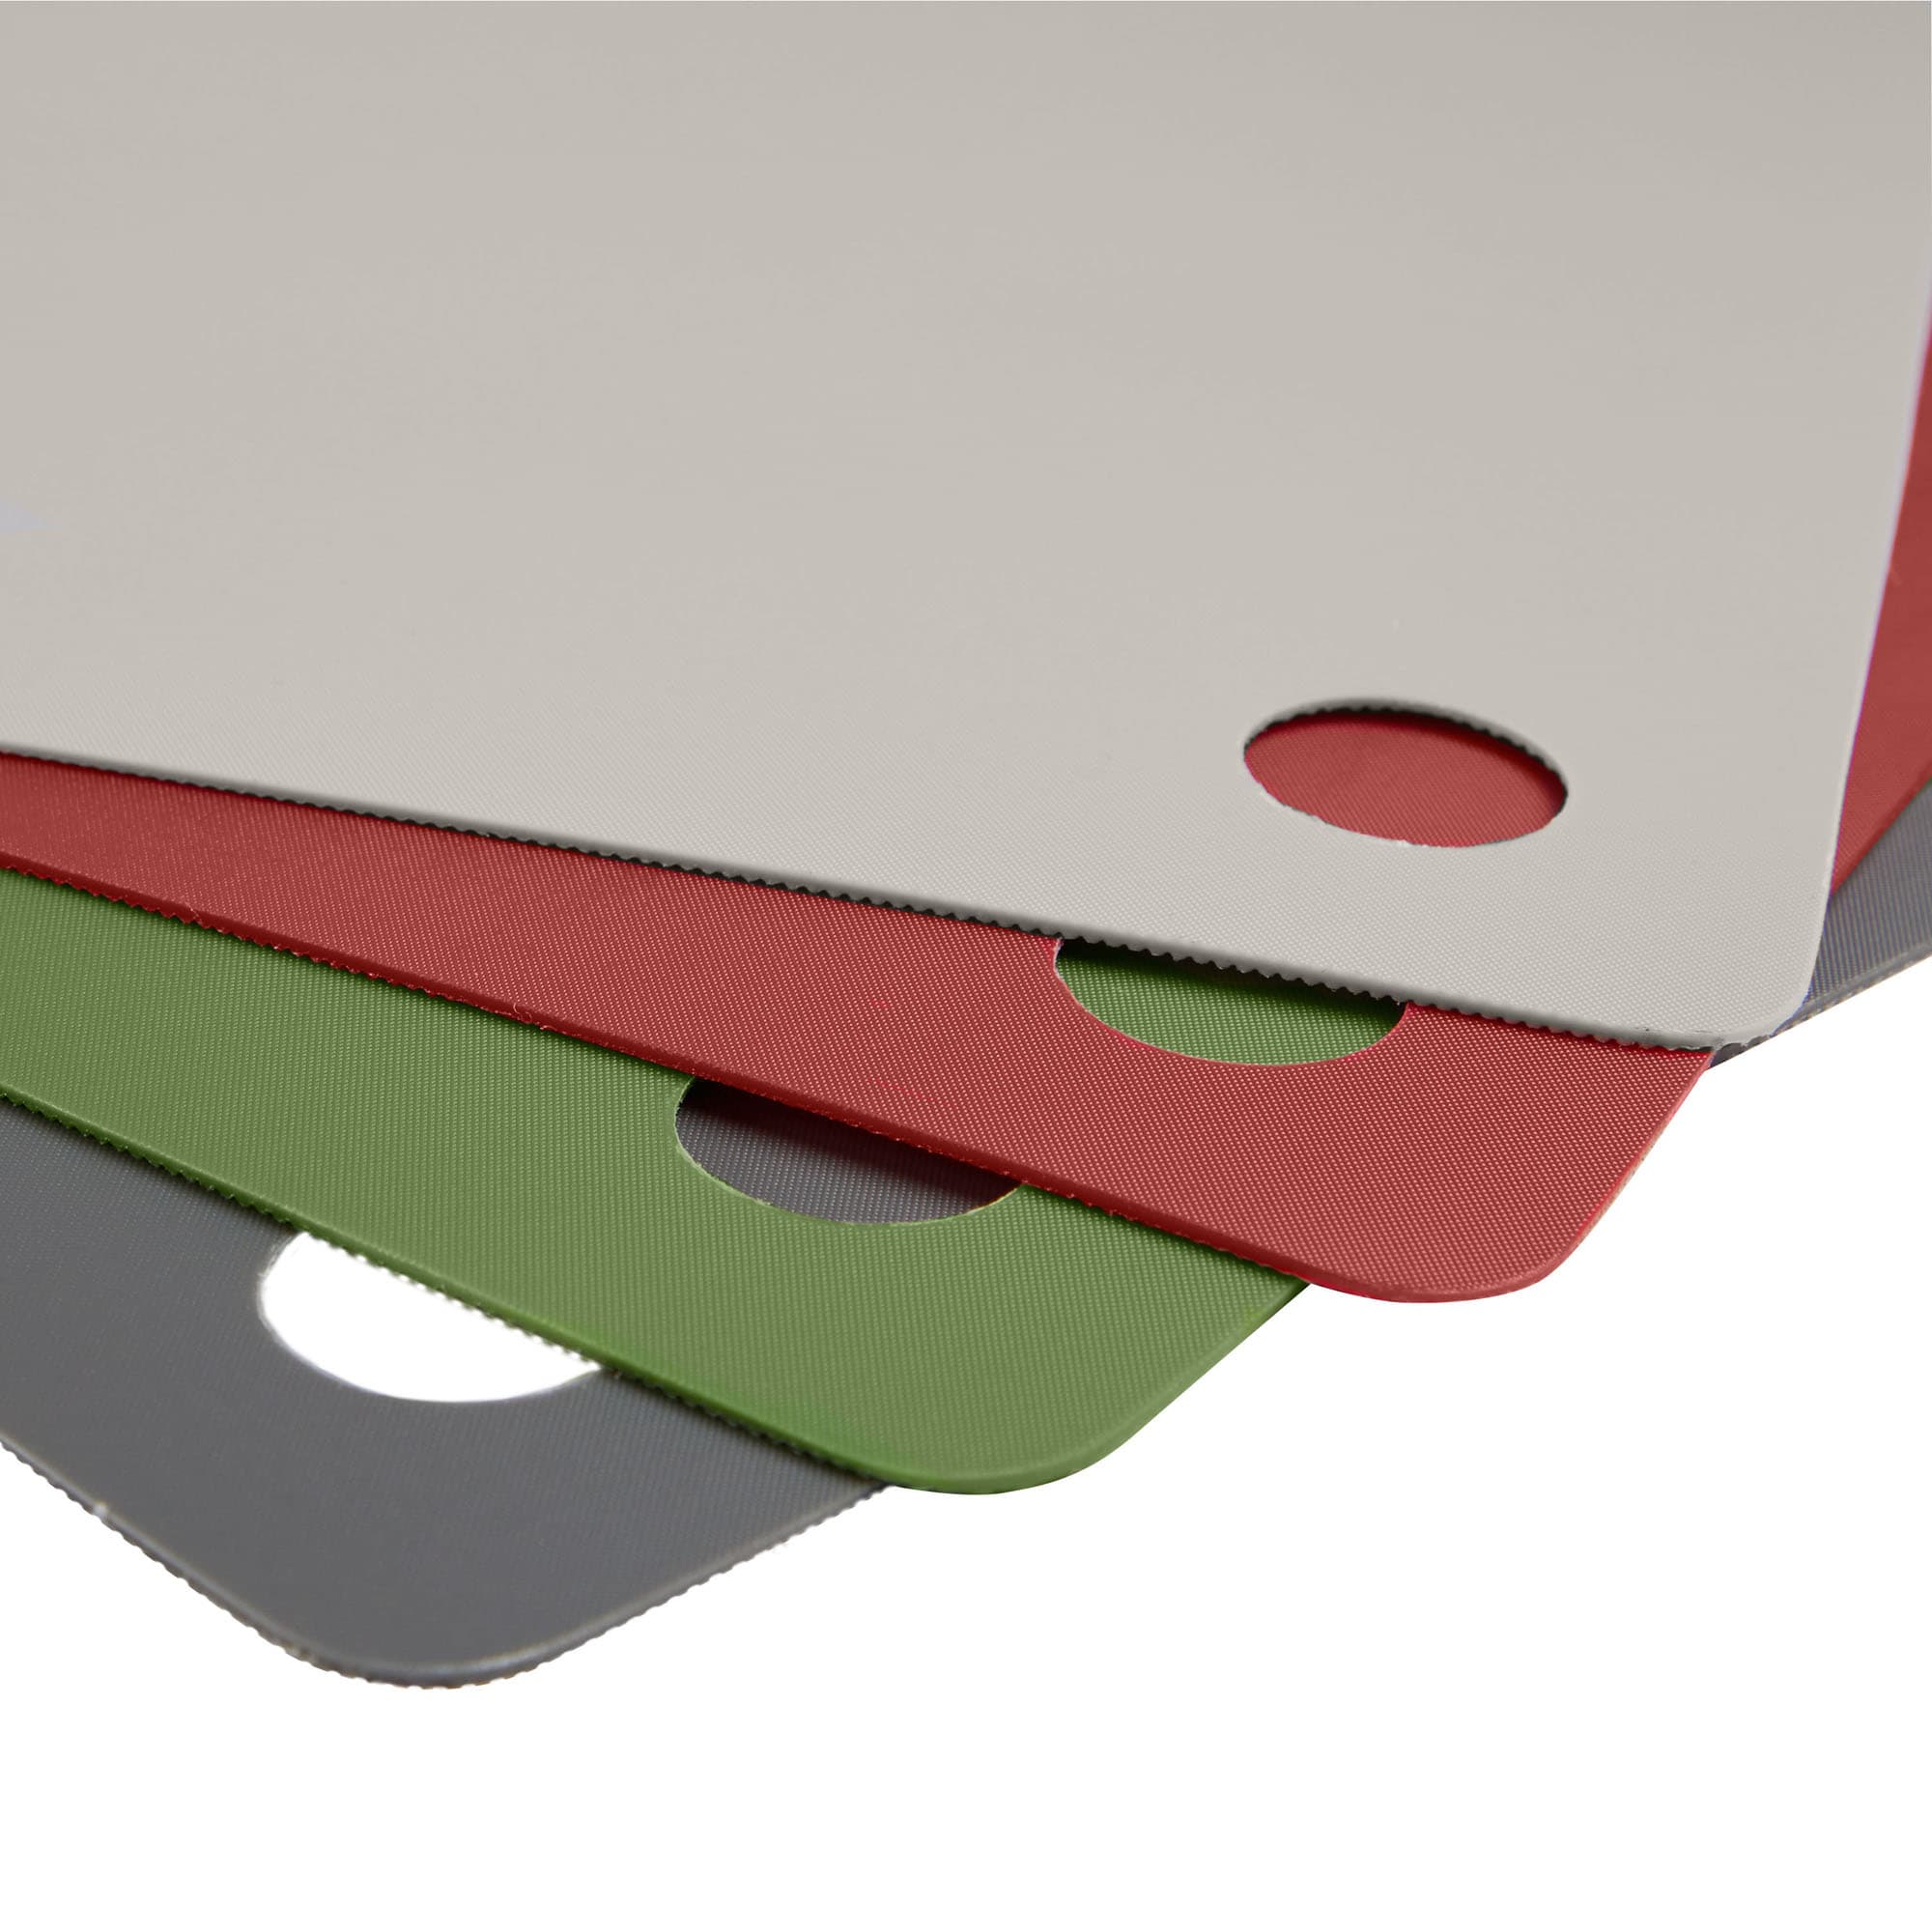 Flexible Cutting Board - 2/Pack